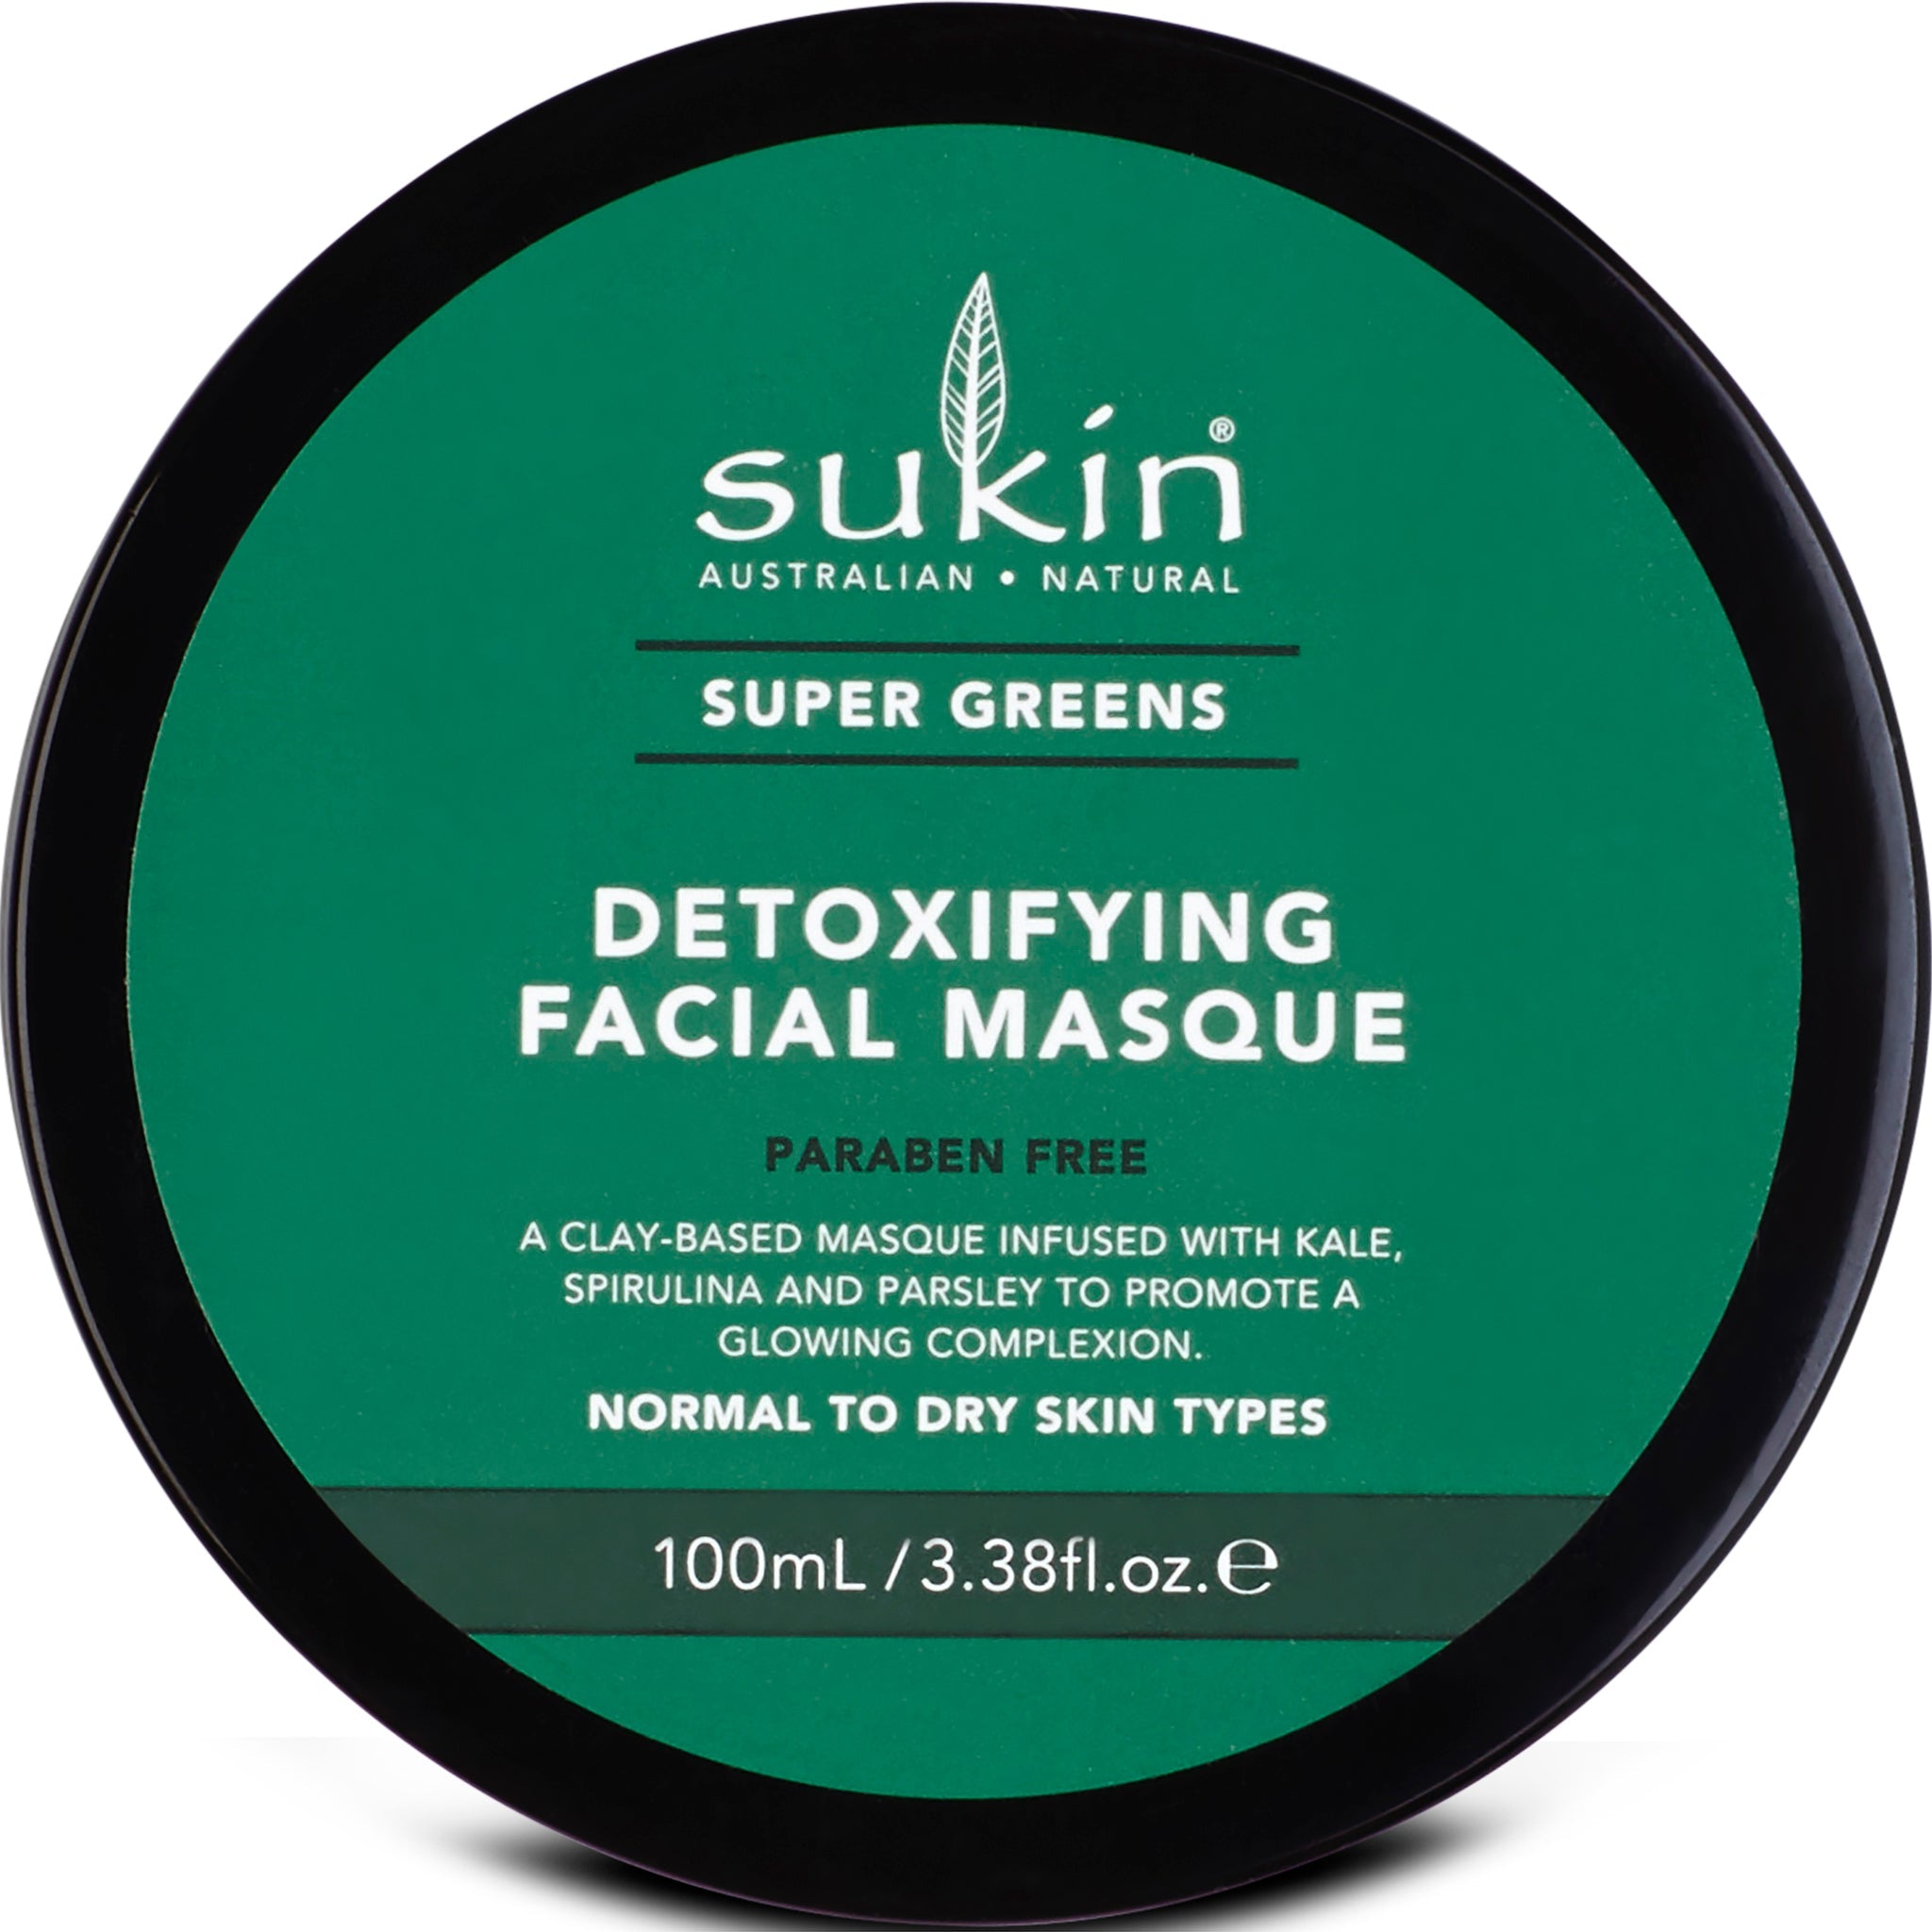 Super Greens Detoxifying Clay Masque - mypure.co.uk